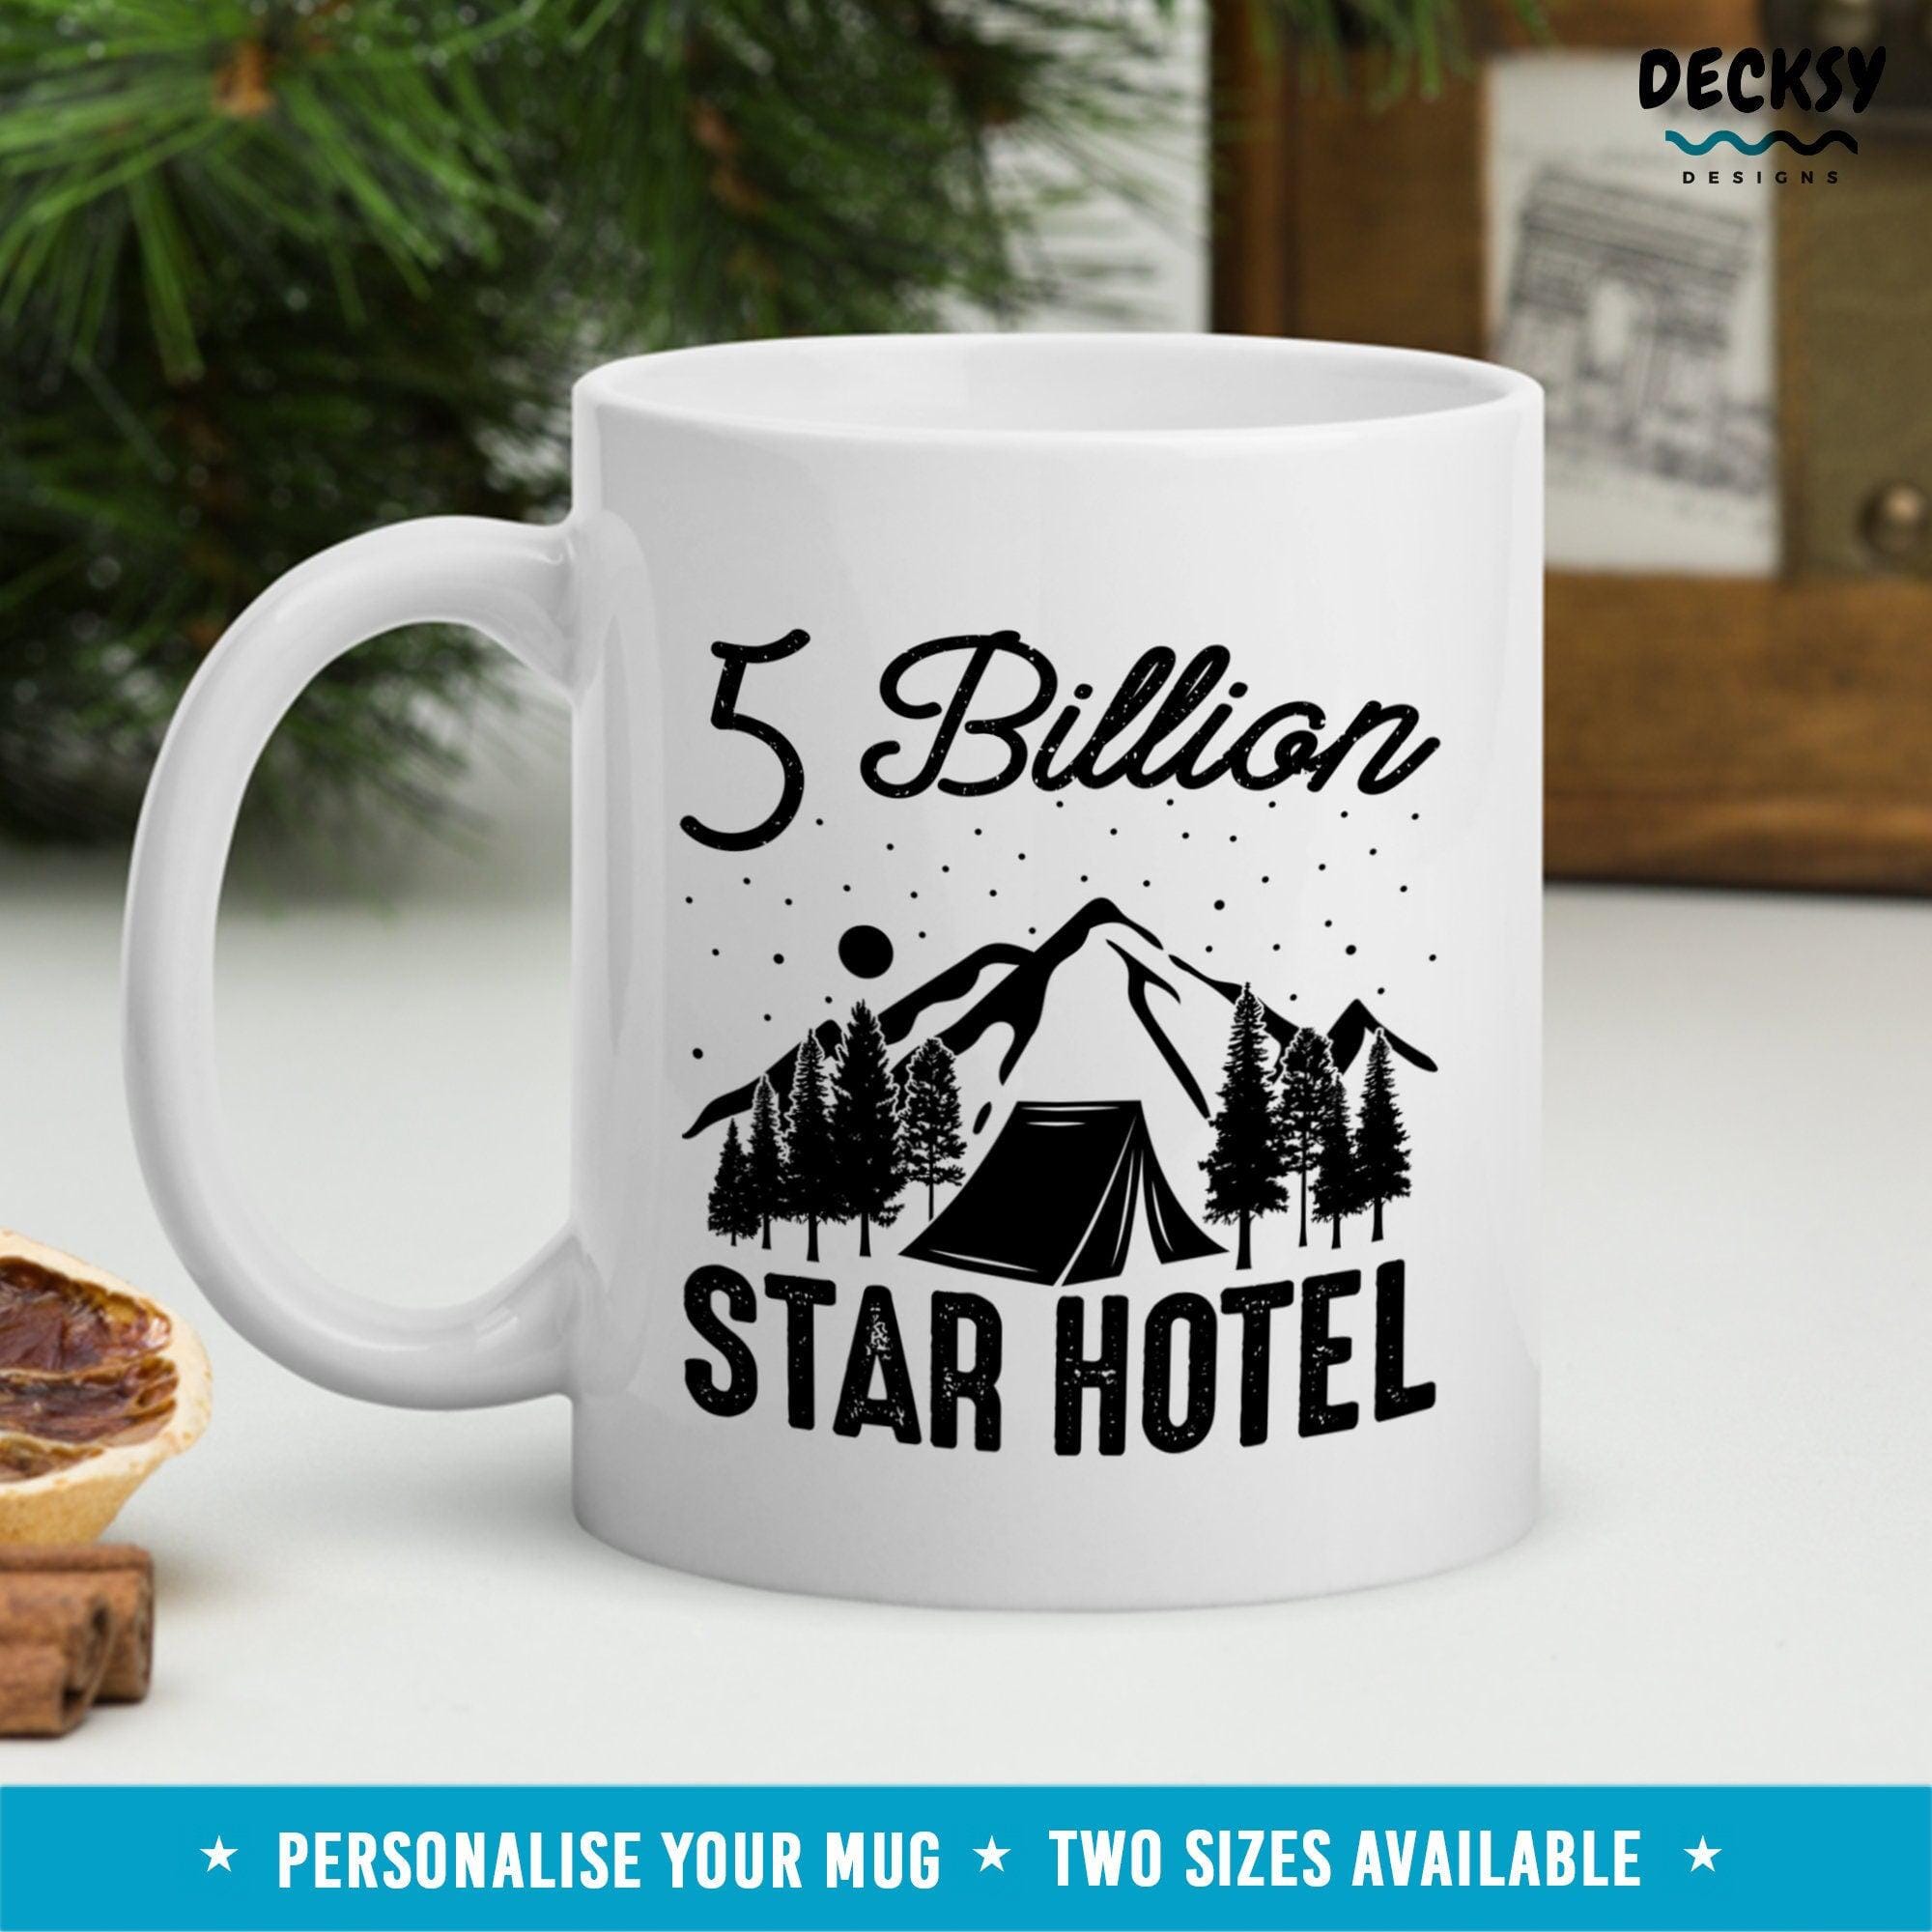 5 Billion Star Hotel Mug, Personalised Camping Gift-Home & Living:Kitchen & Dining:Drink & Barware:Drinkware:Mugs-DecksyDesigns-11 Oz-NO PERSONALISATION-DecksyDesigns